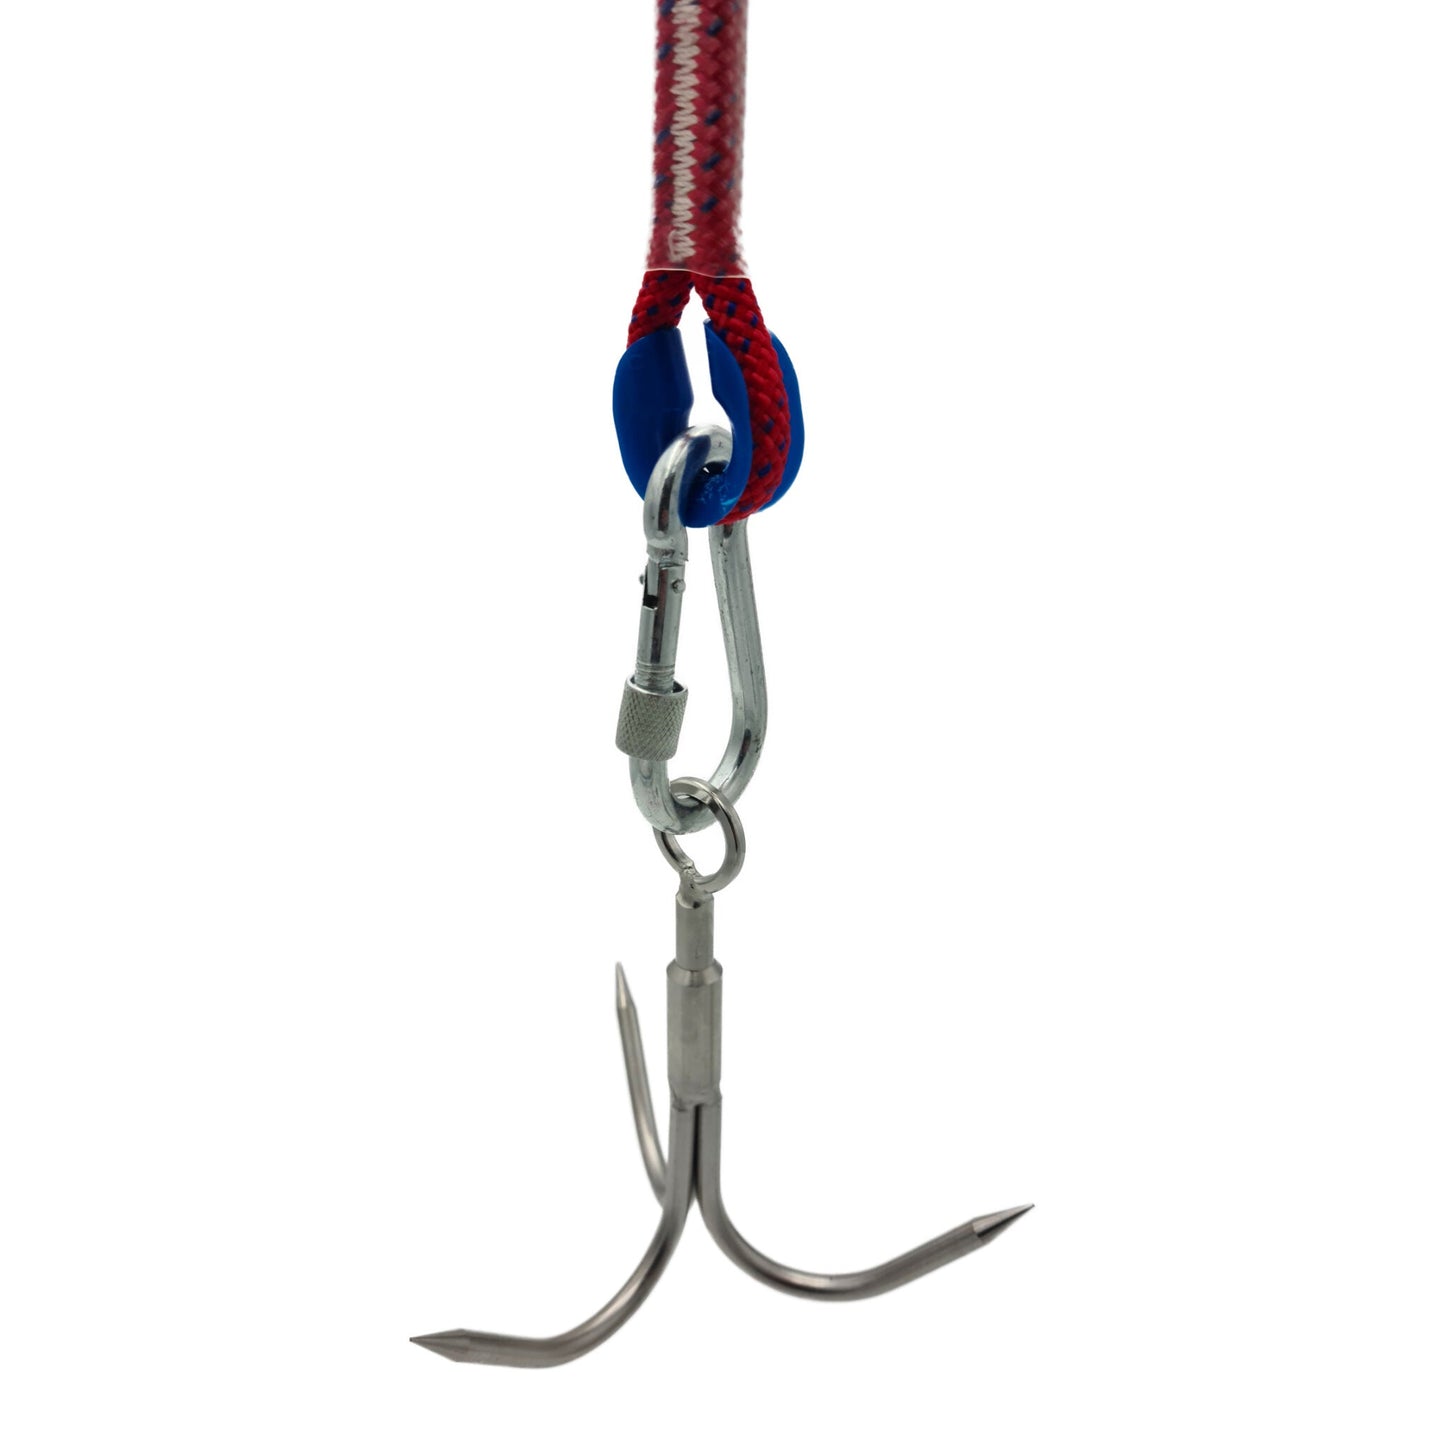 Grappling hook for magnet fishing jaws kit